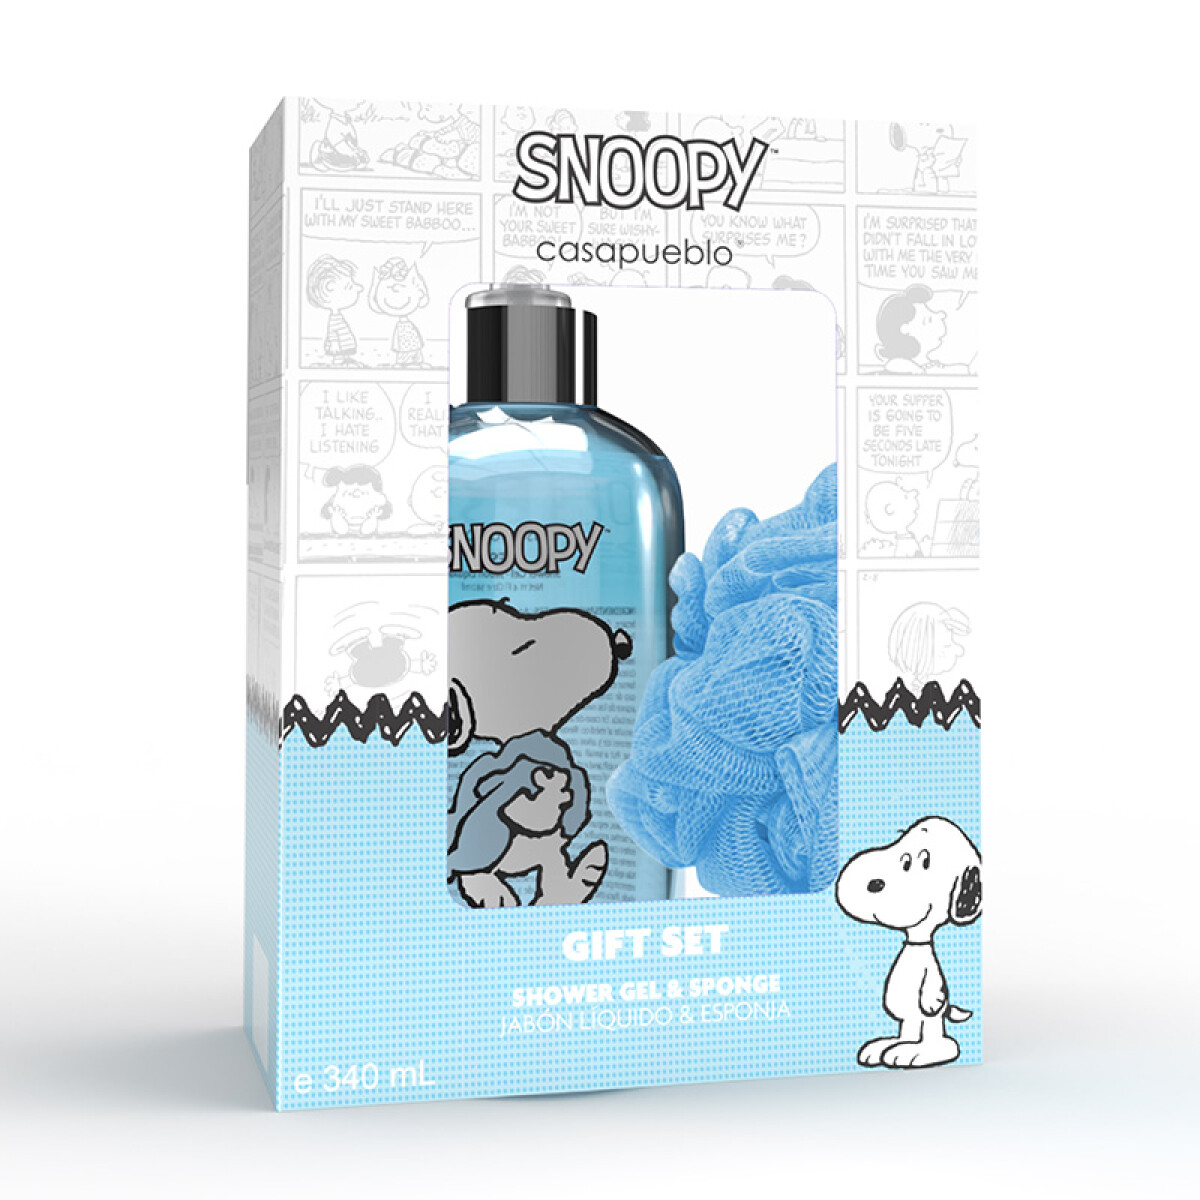 Casapueblo Snoopy Set - Shower gel fresh 340 ml + Esponja 